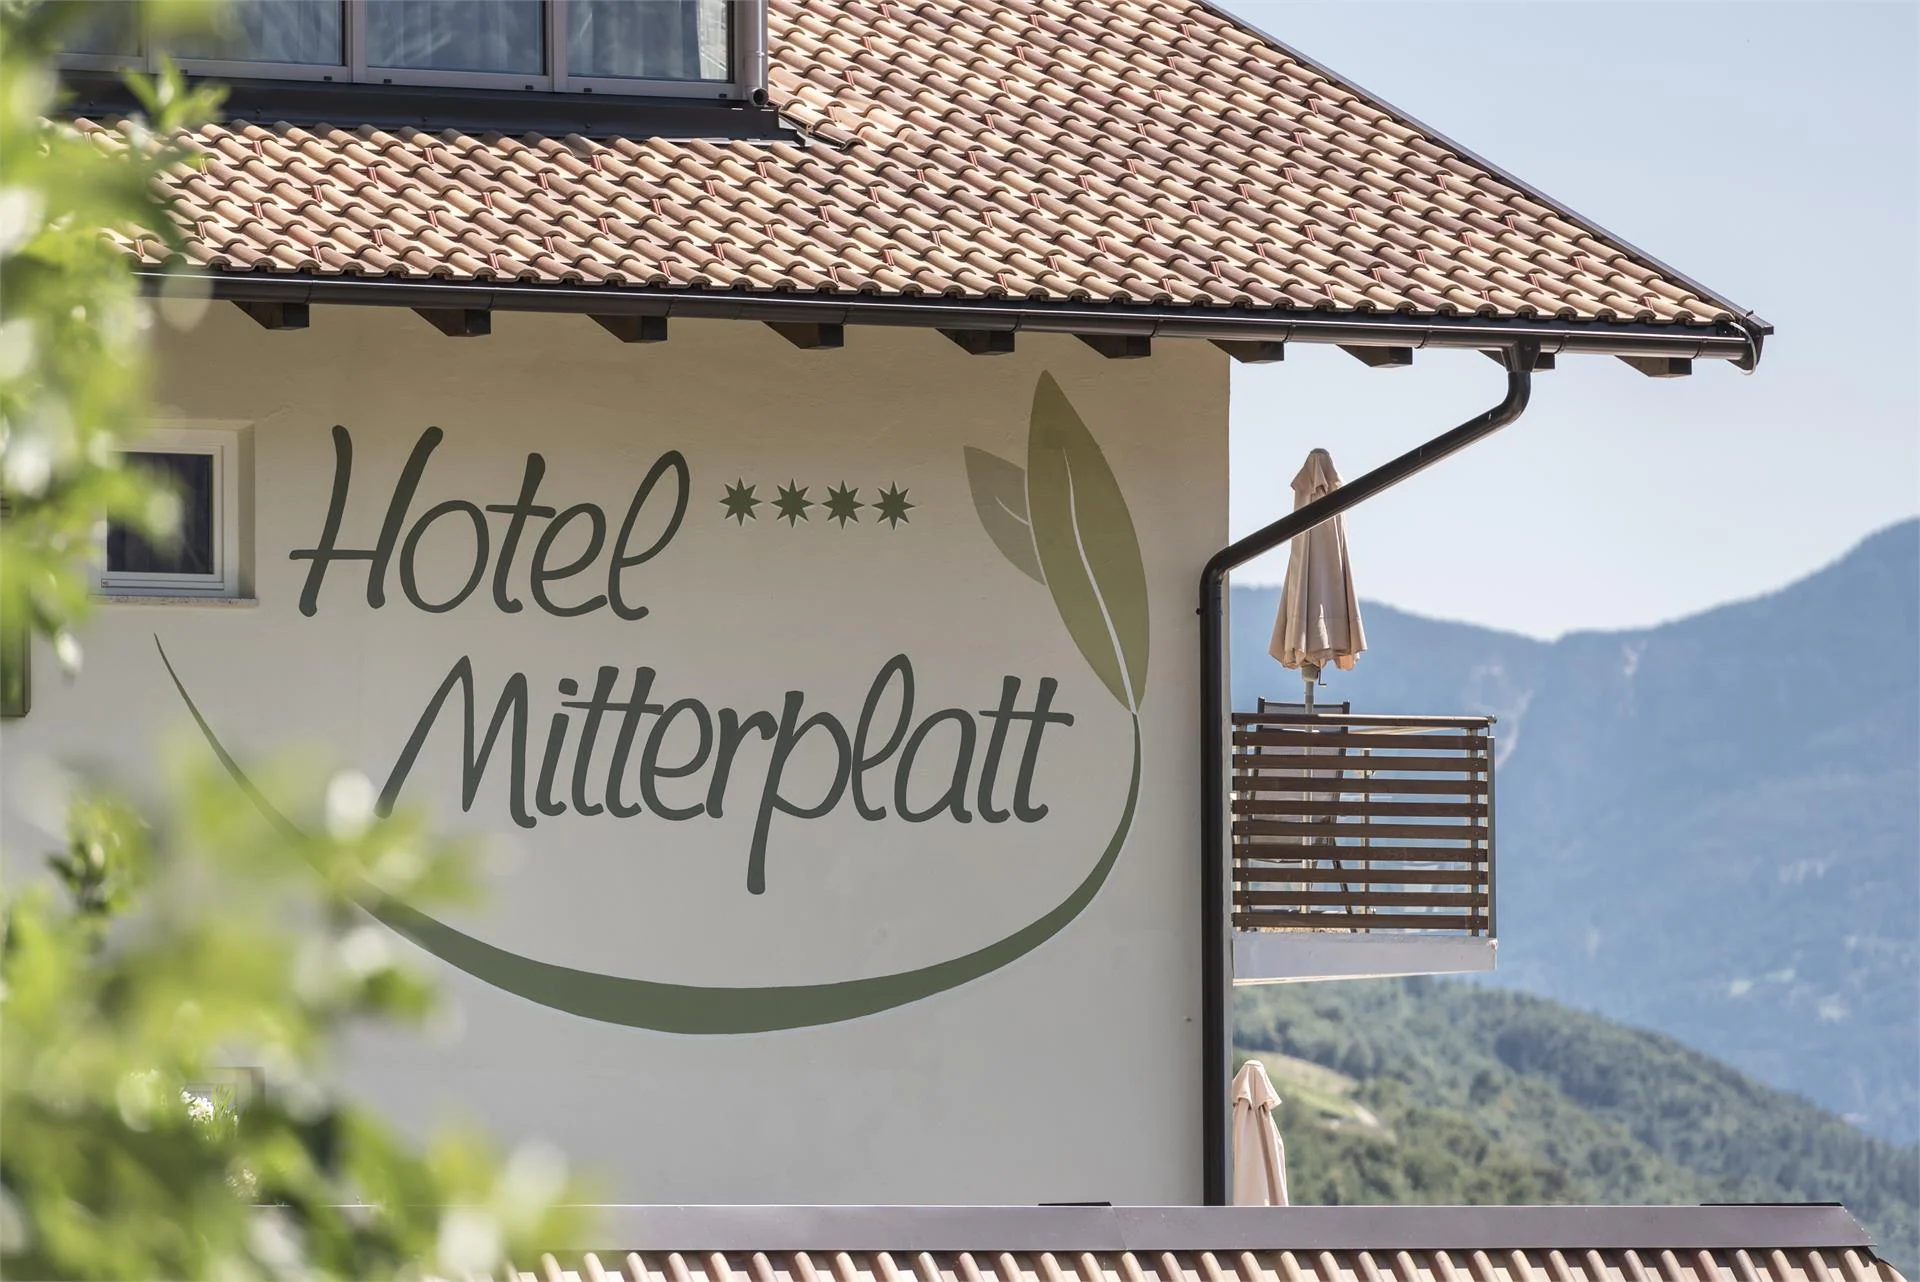 Hotel Mitterplatt Scena 3 suedtirol.info